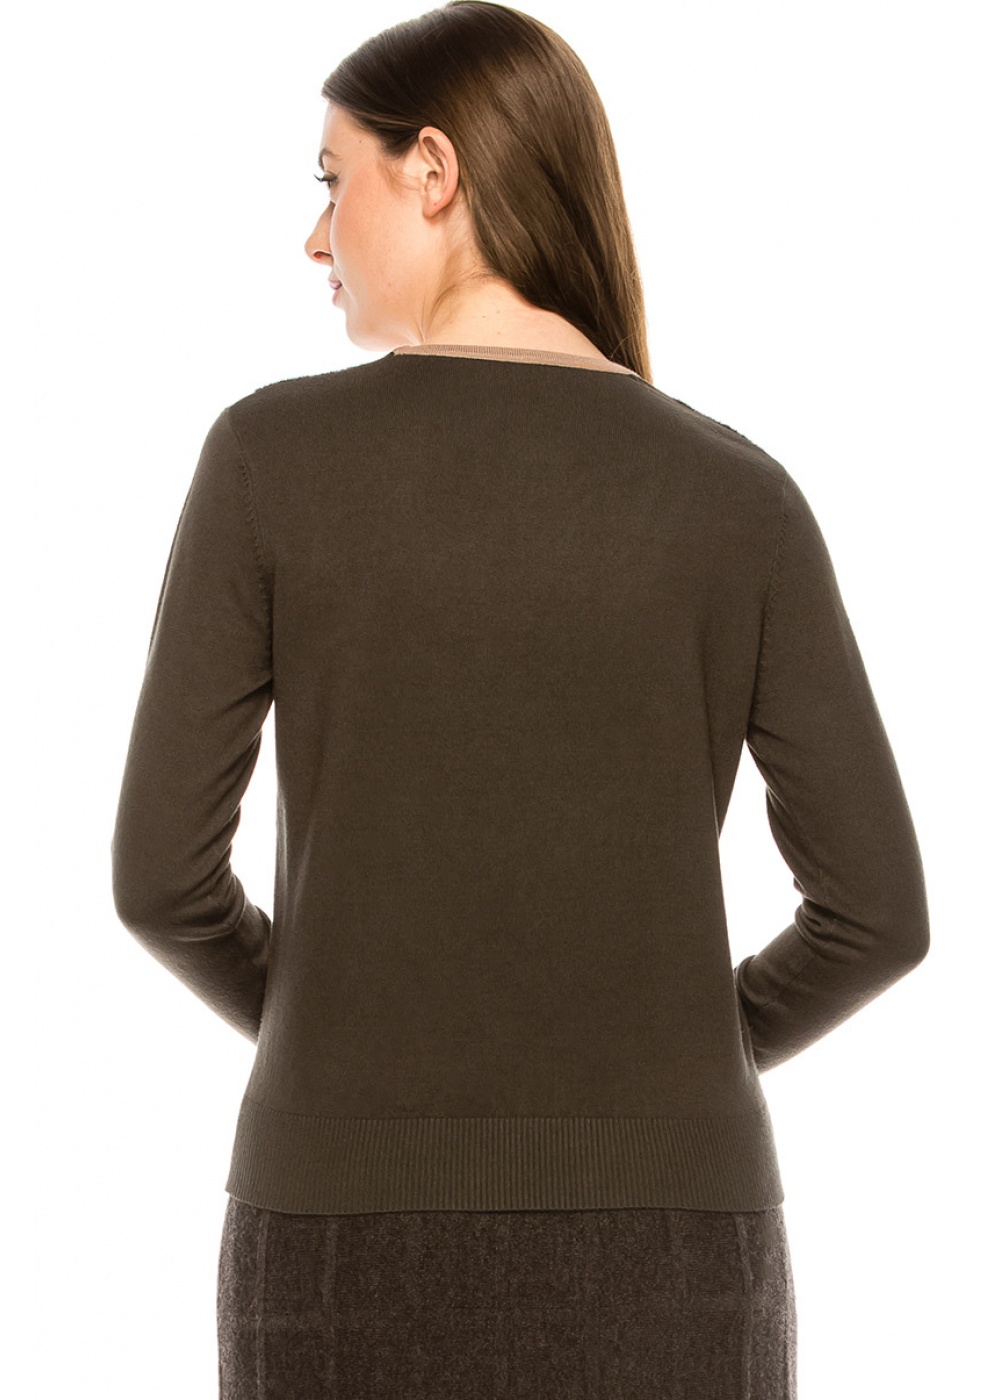 The "V-Neck" Sweater - Olive